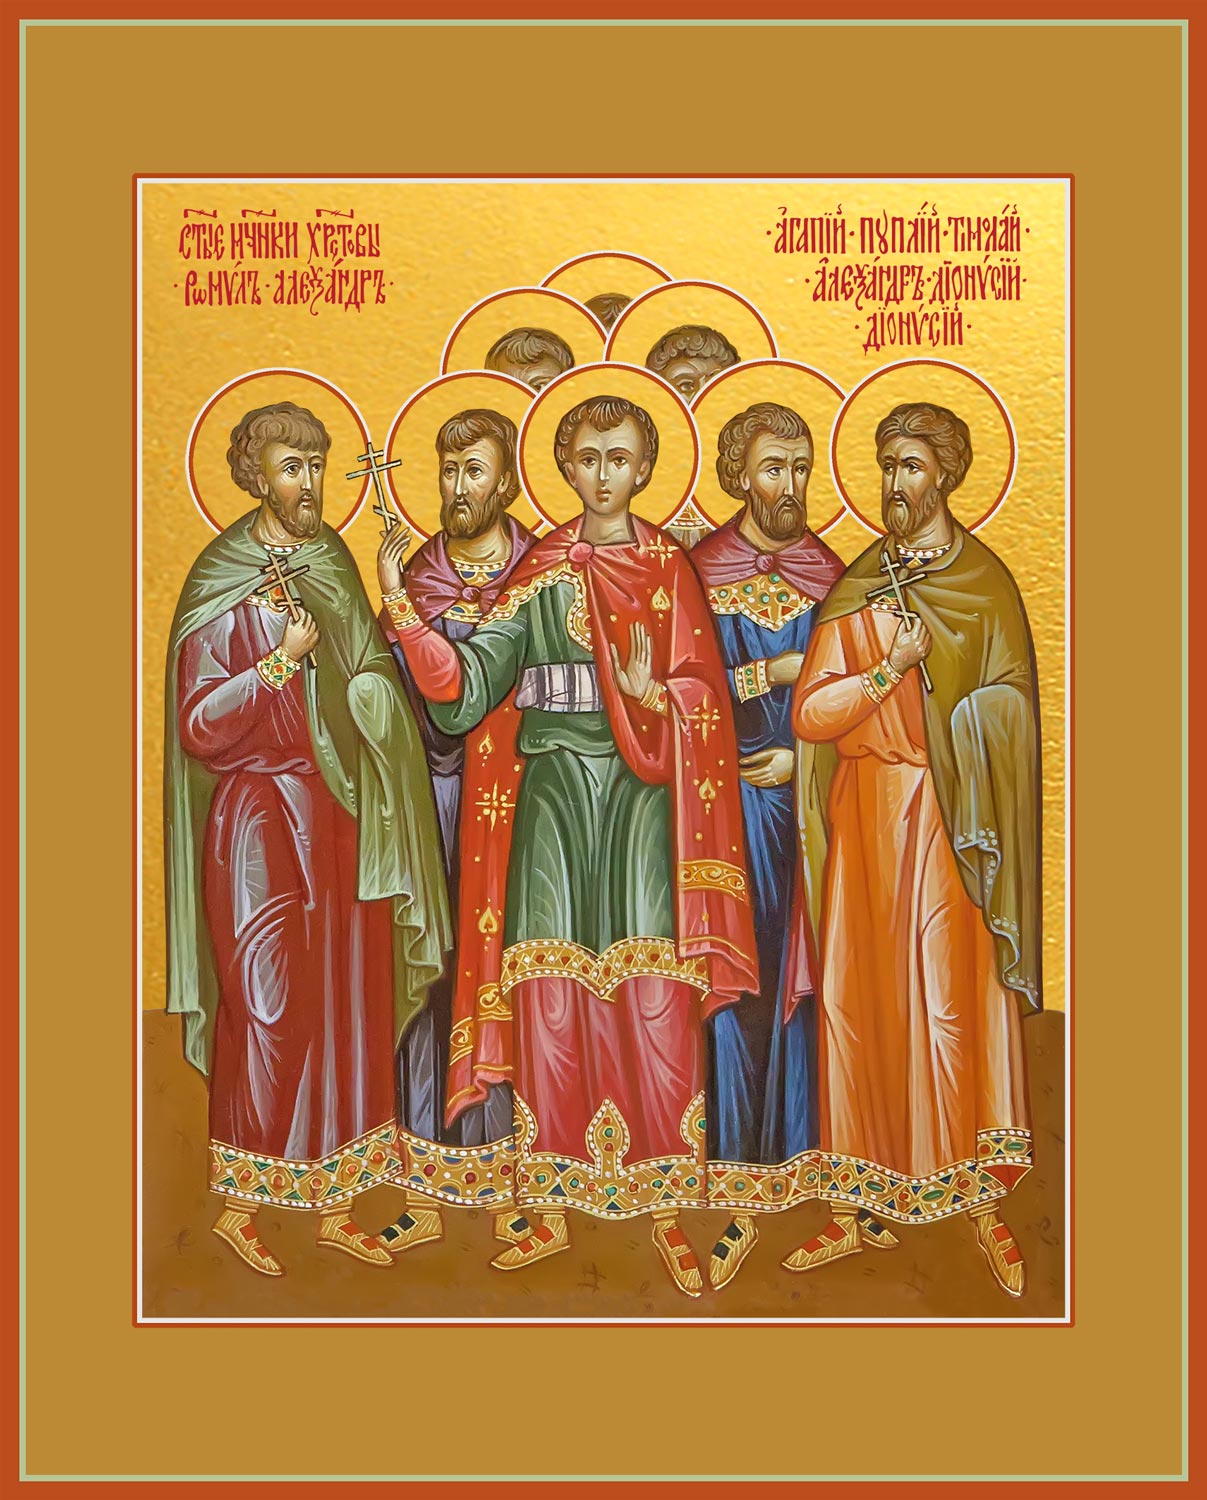 мч. Ага́пия и с ним семи мучеников: Пу́плия, Тимола́я (Тимофе́я), Роми́ла, Алекса́ндра, Алекса́ндра (другого), Диони́сия и Диони́сия (другого) (303)